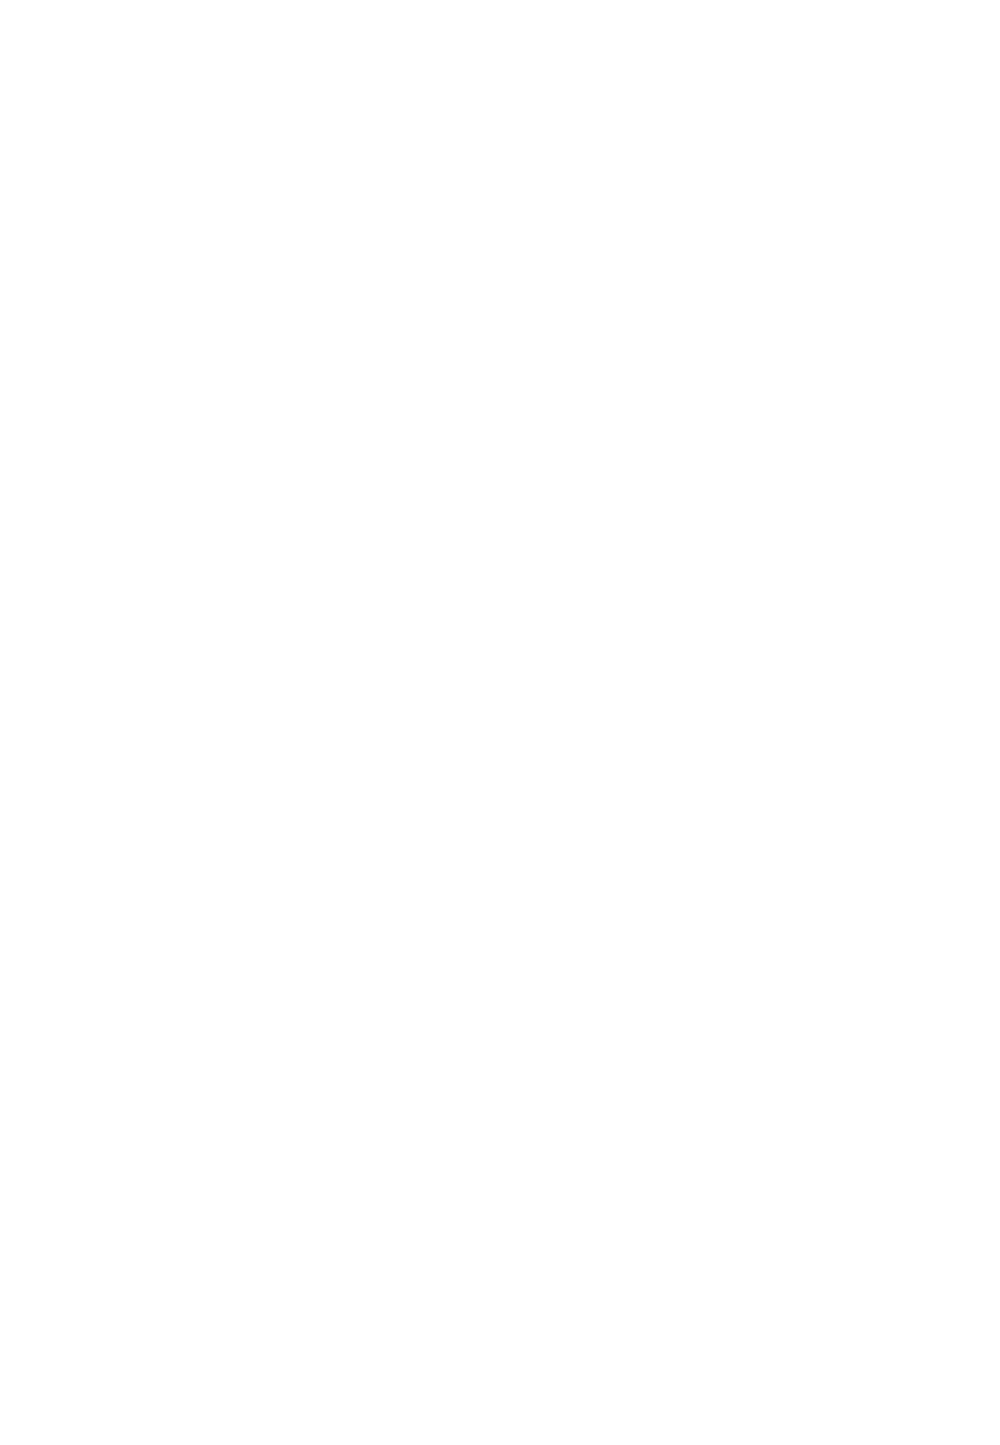 Home Craft Enterprises Ltd.